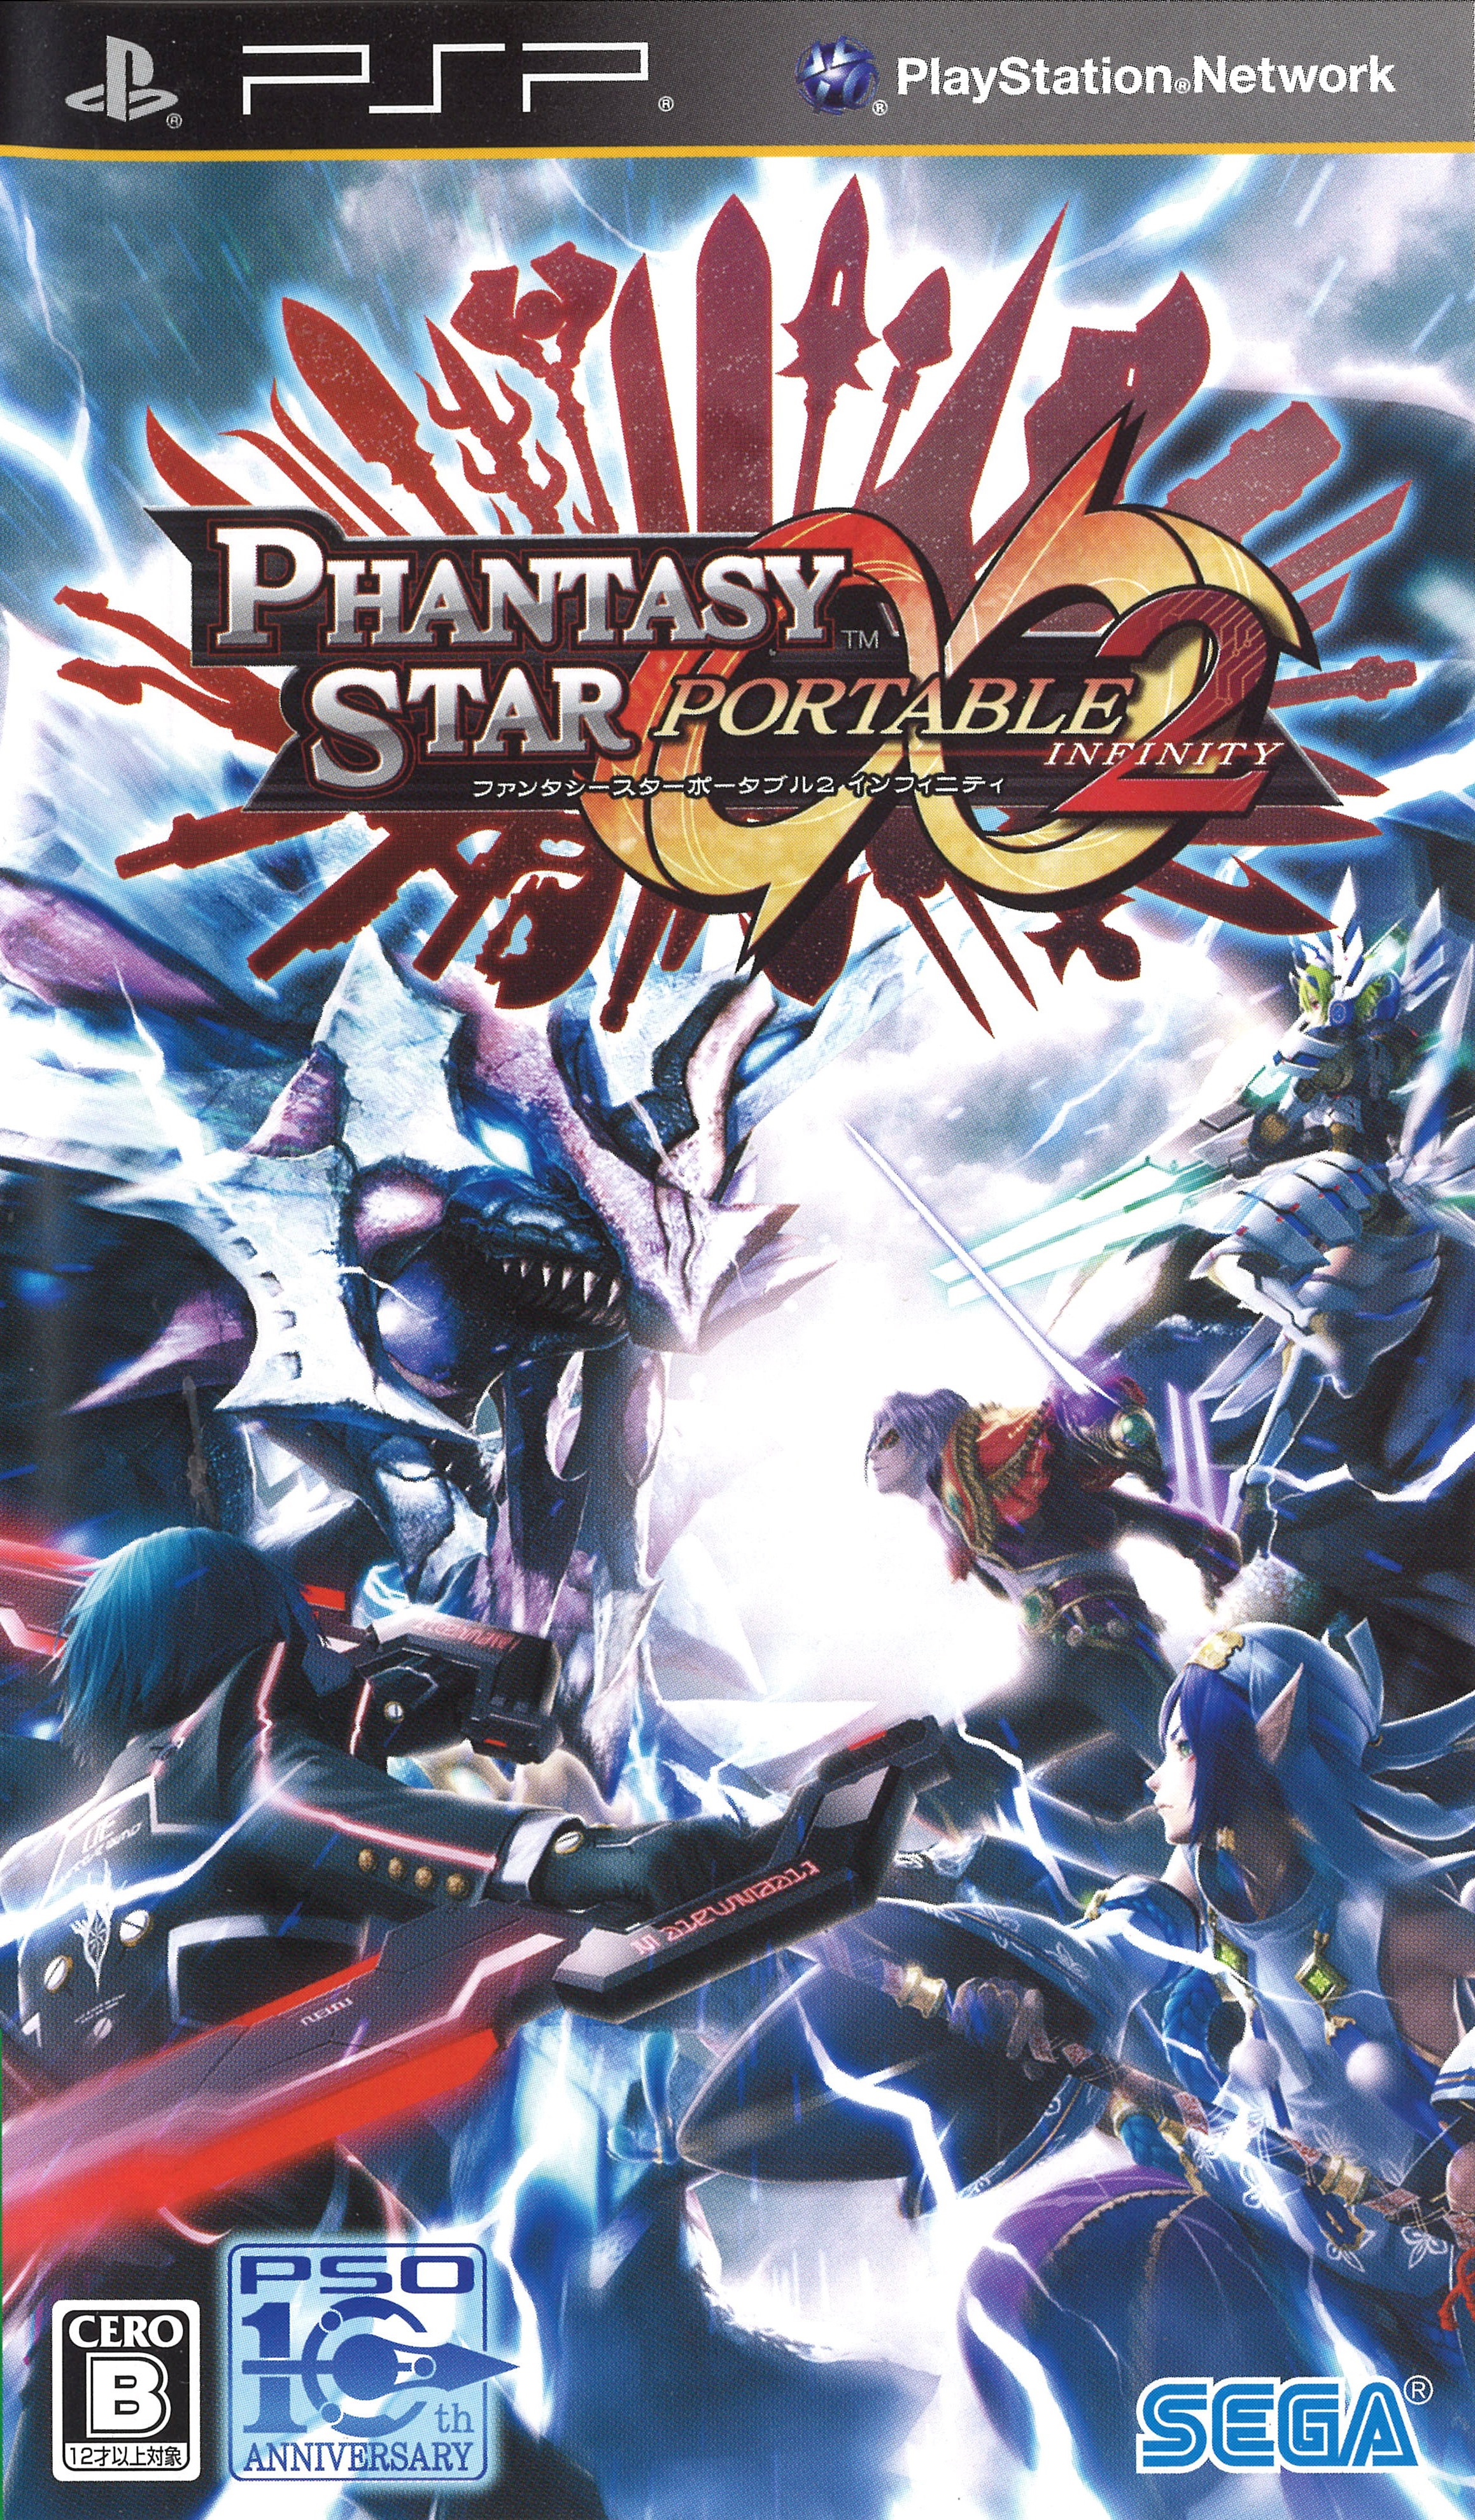 Phantasy Star Portable 2 Infinity Ending Guide